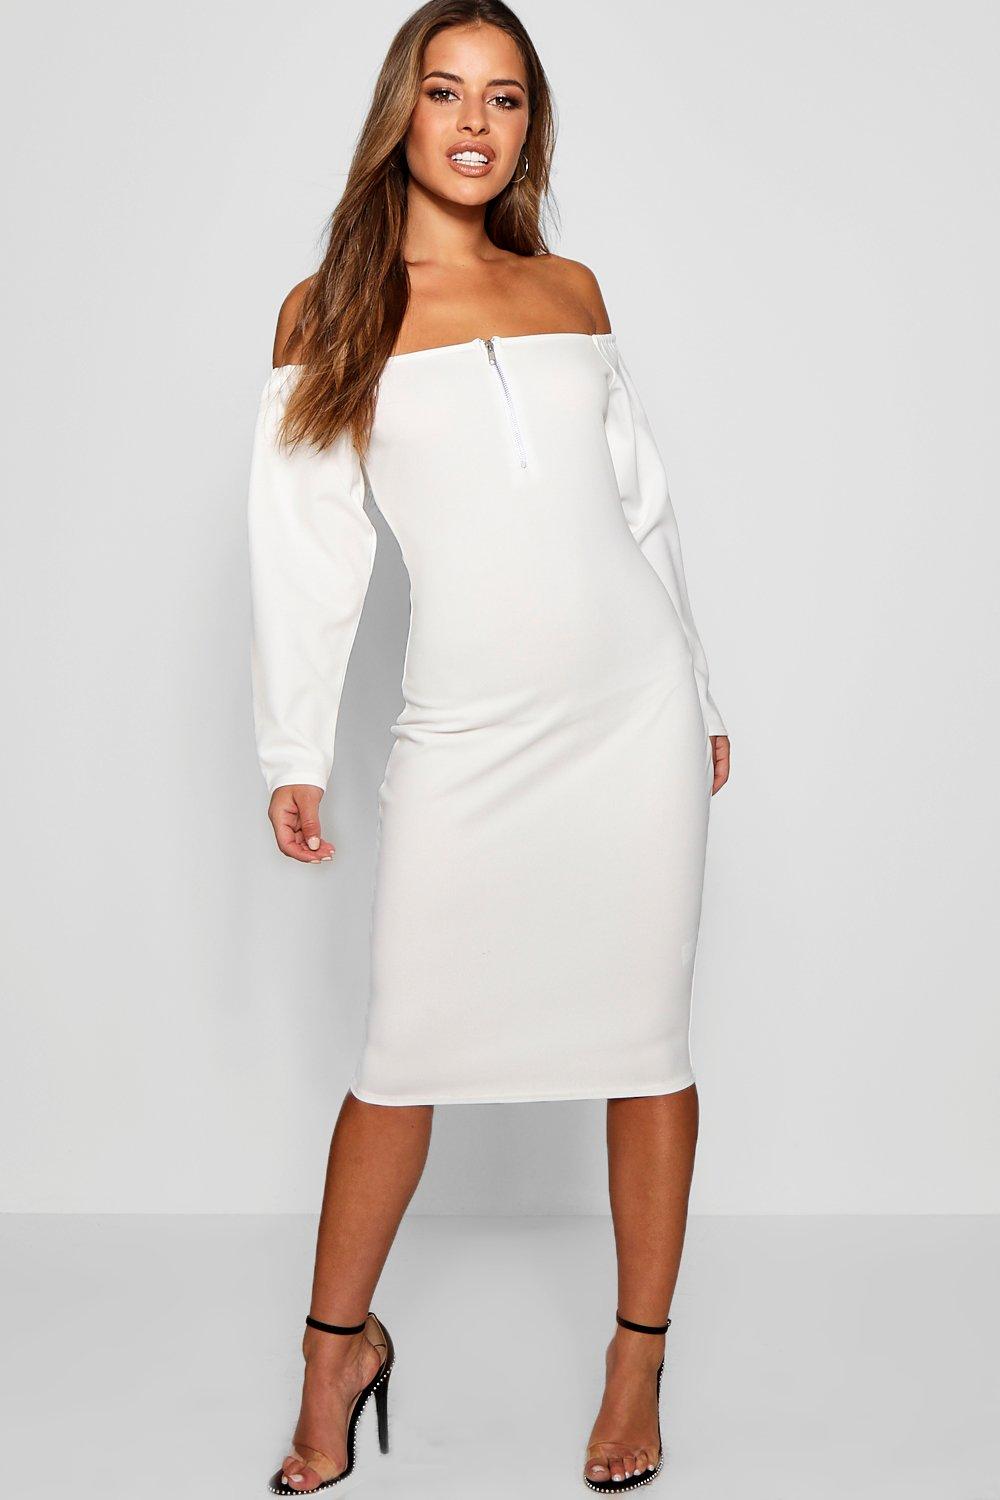 white long sleeve bardot dress